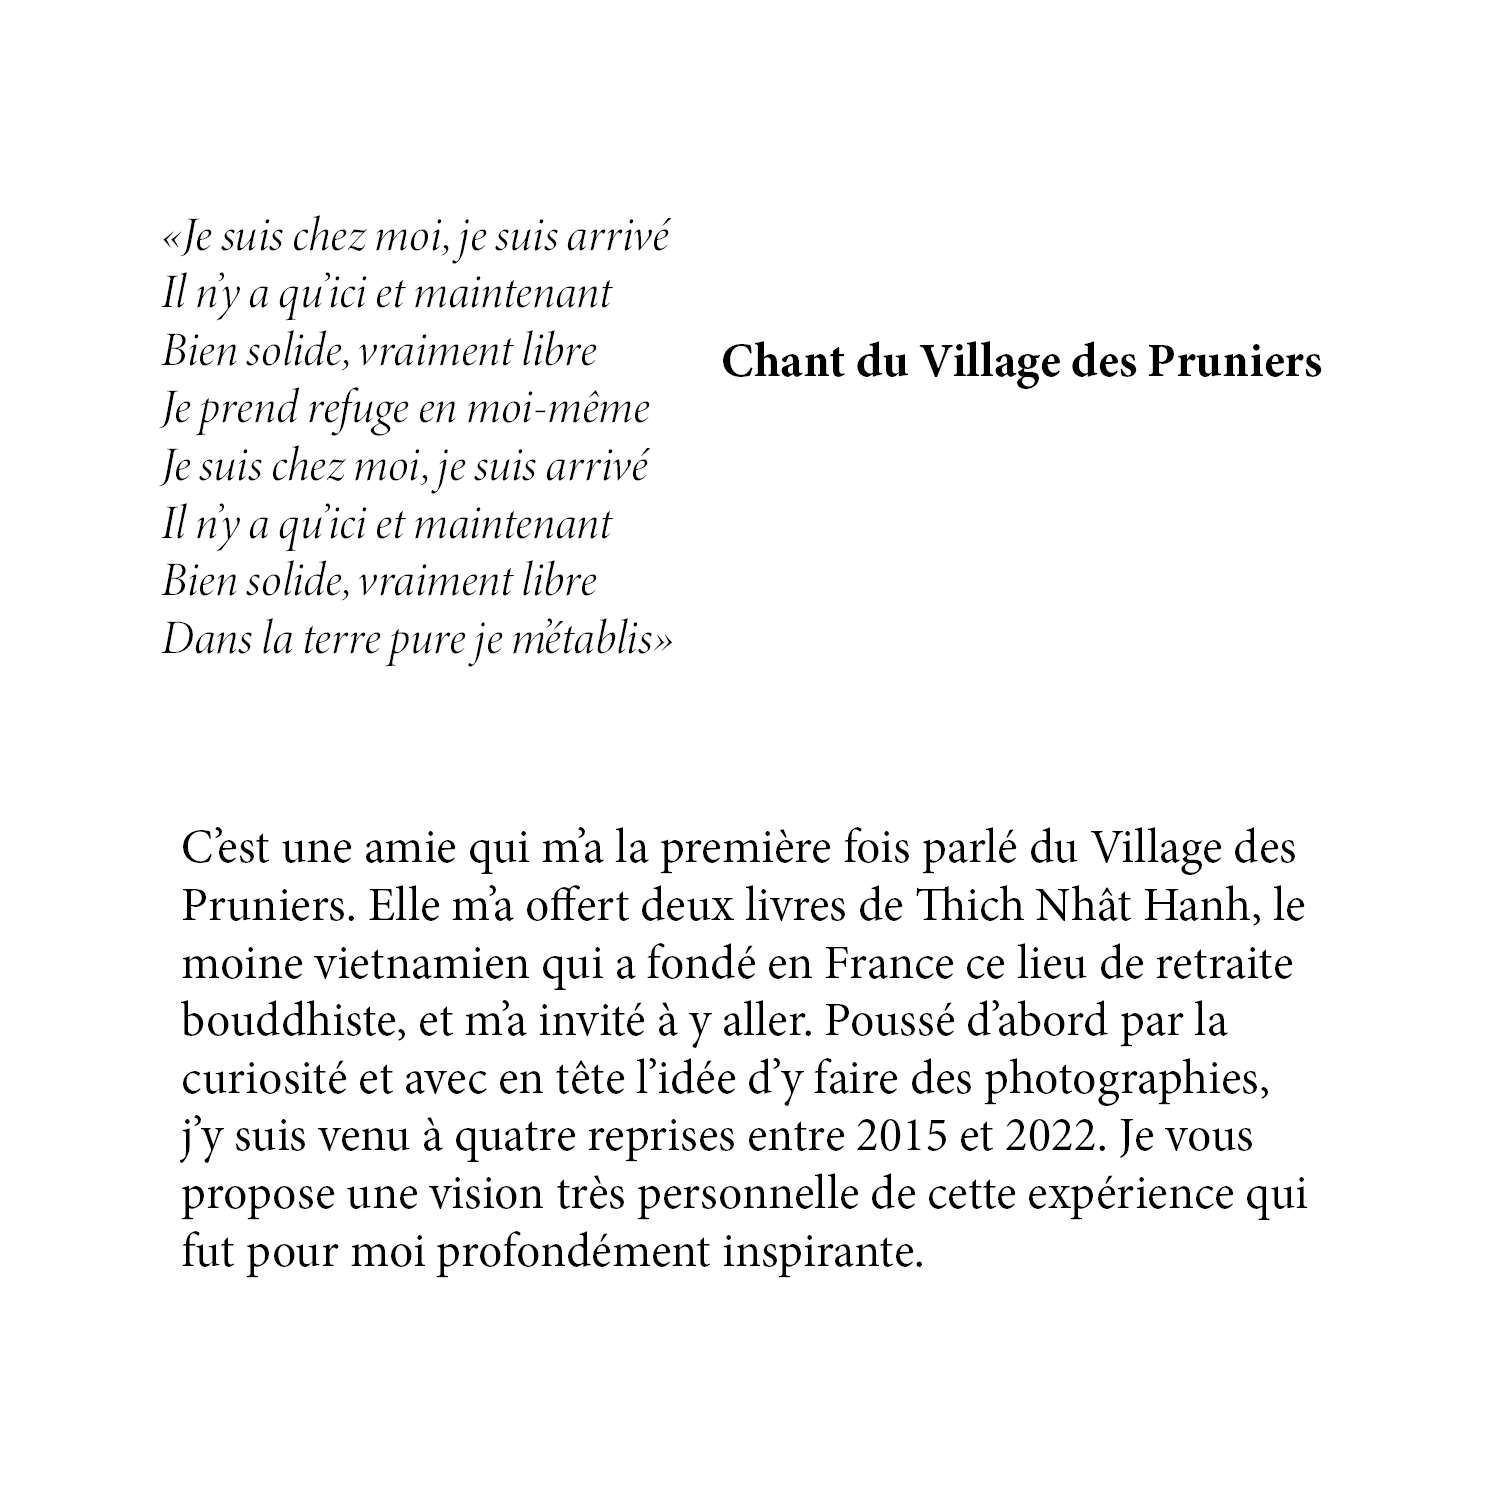 Village-des-Pruniers-texte-court-1500px